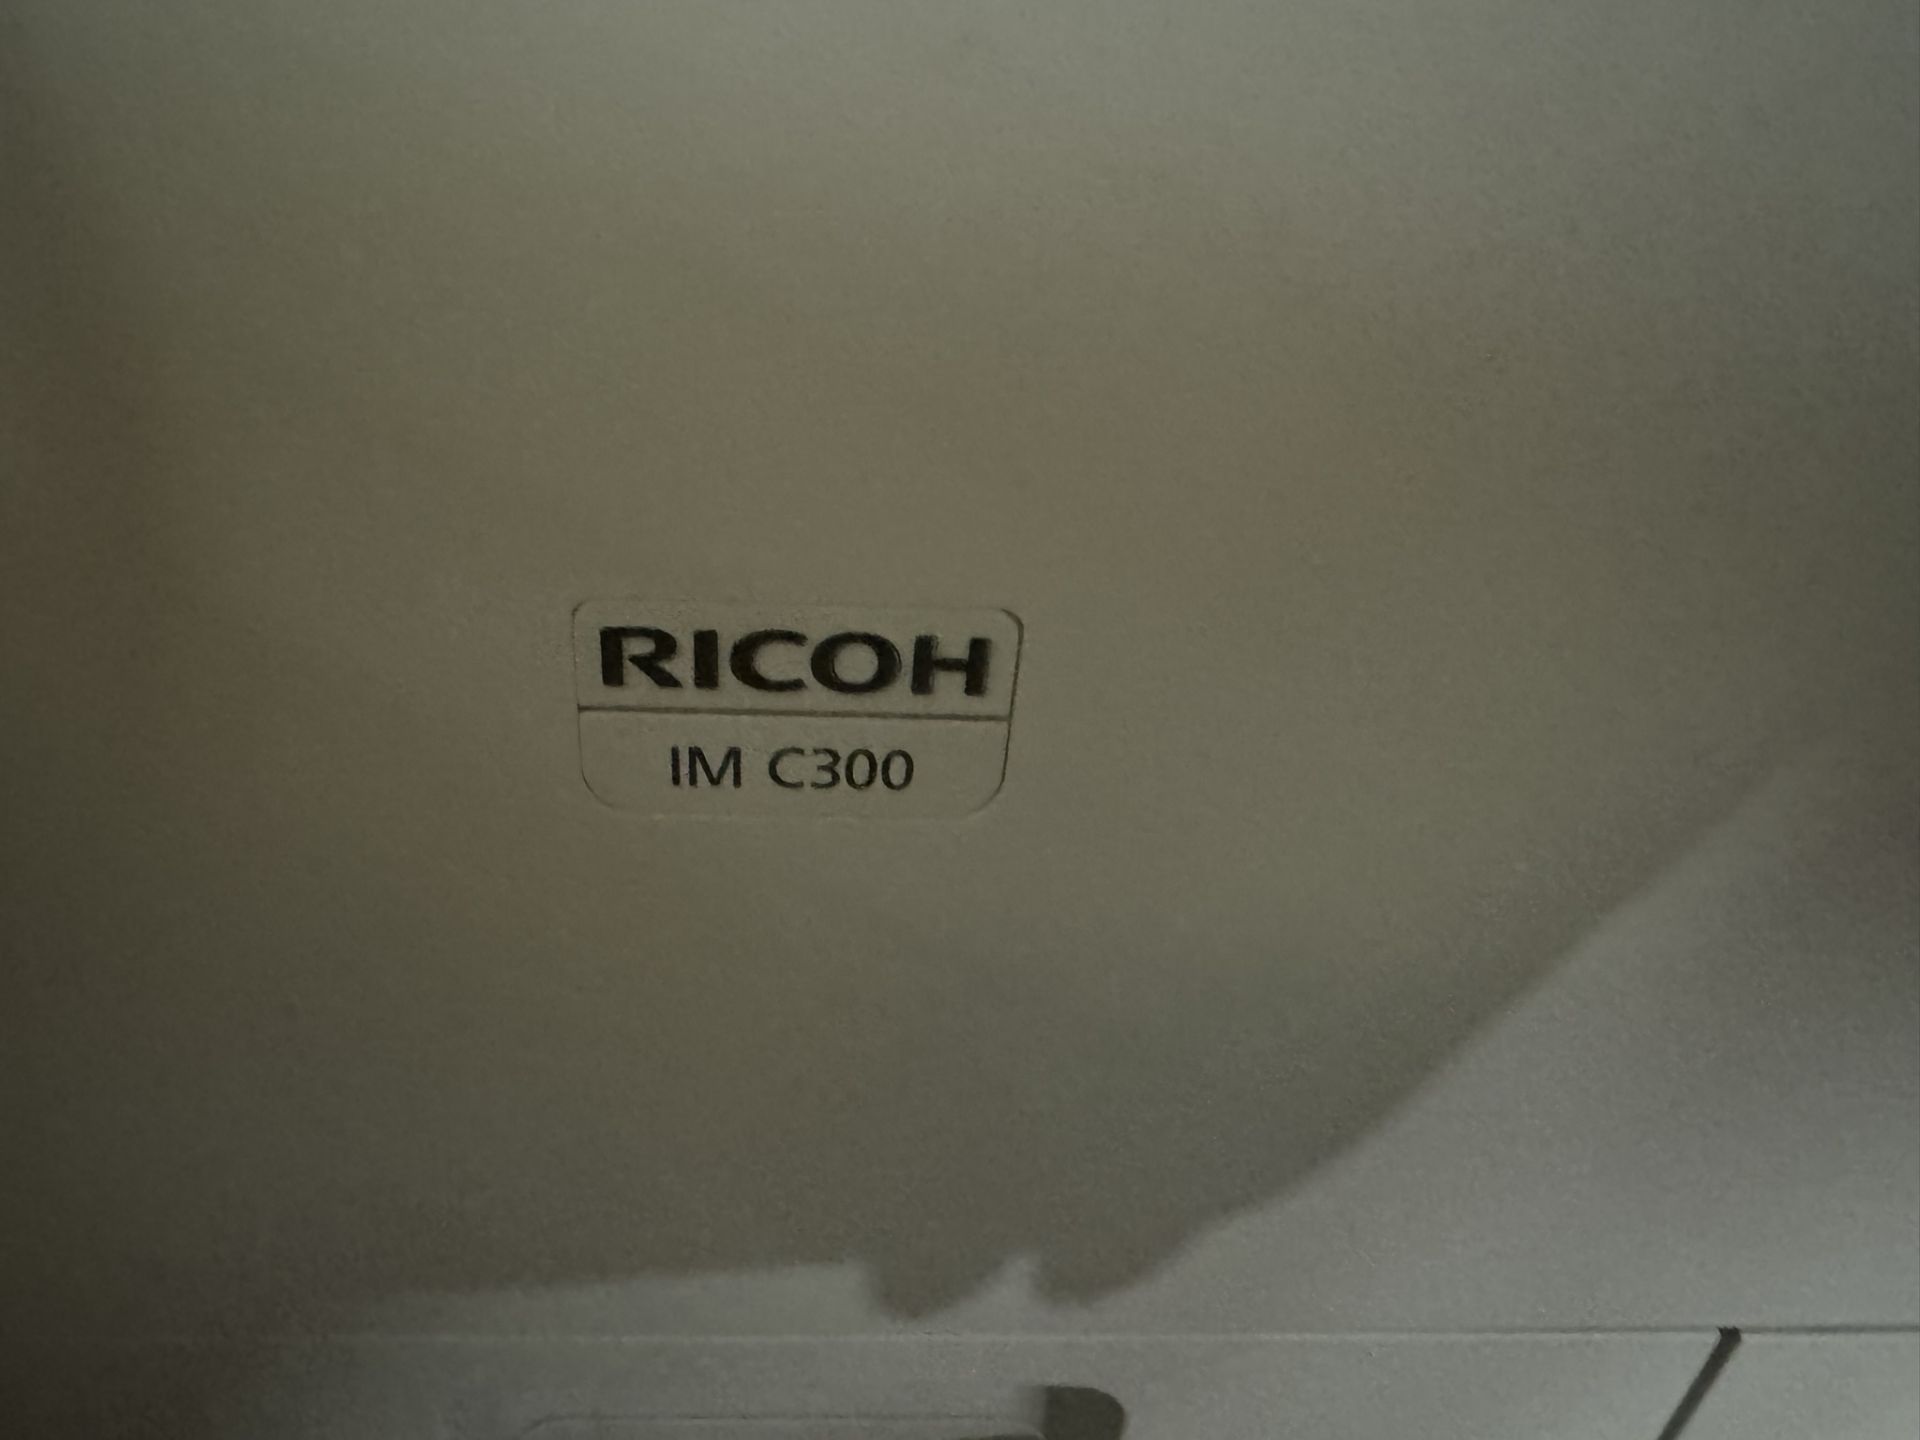 Ricoh IMC300 A4 Colour Multifunction laser printer - Image 3 of 4